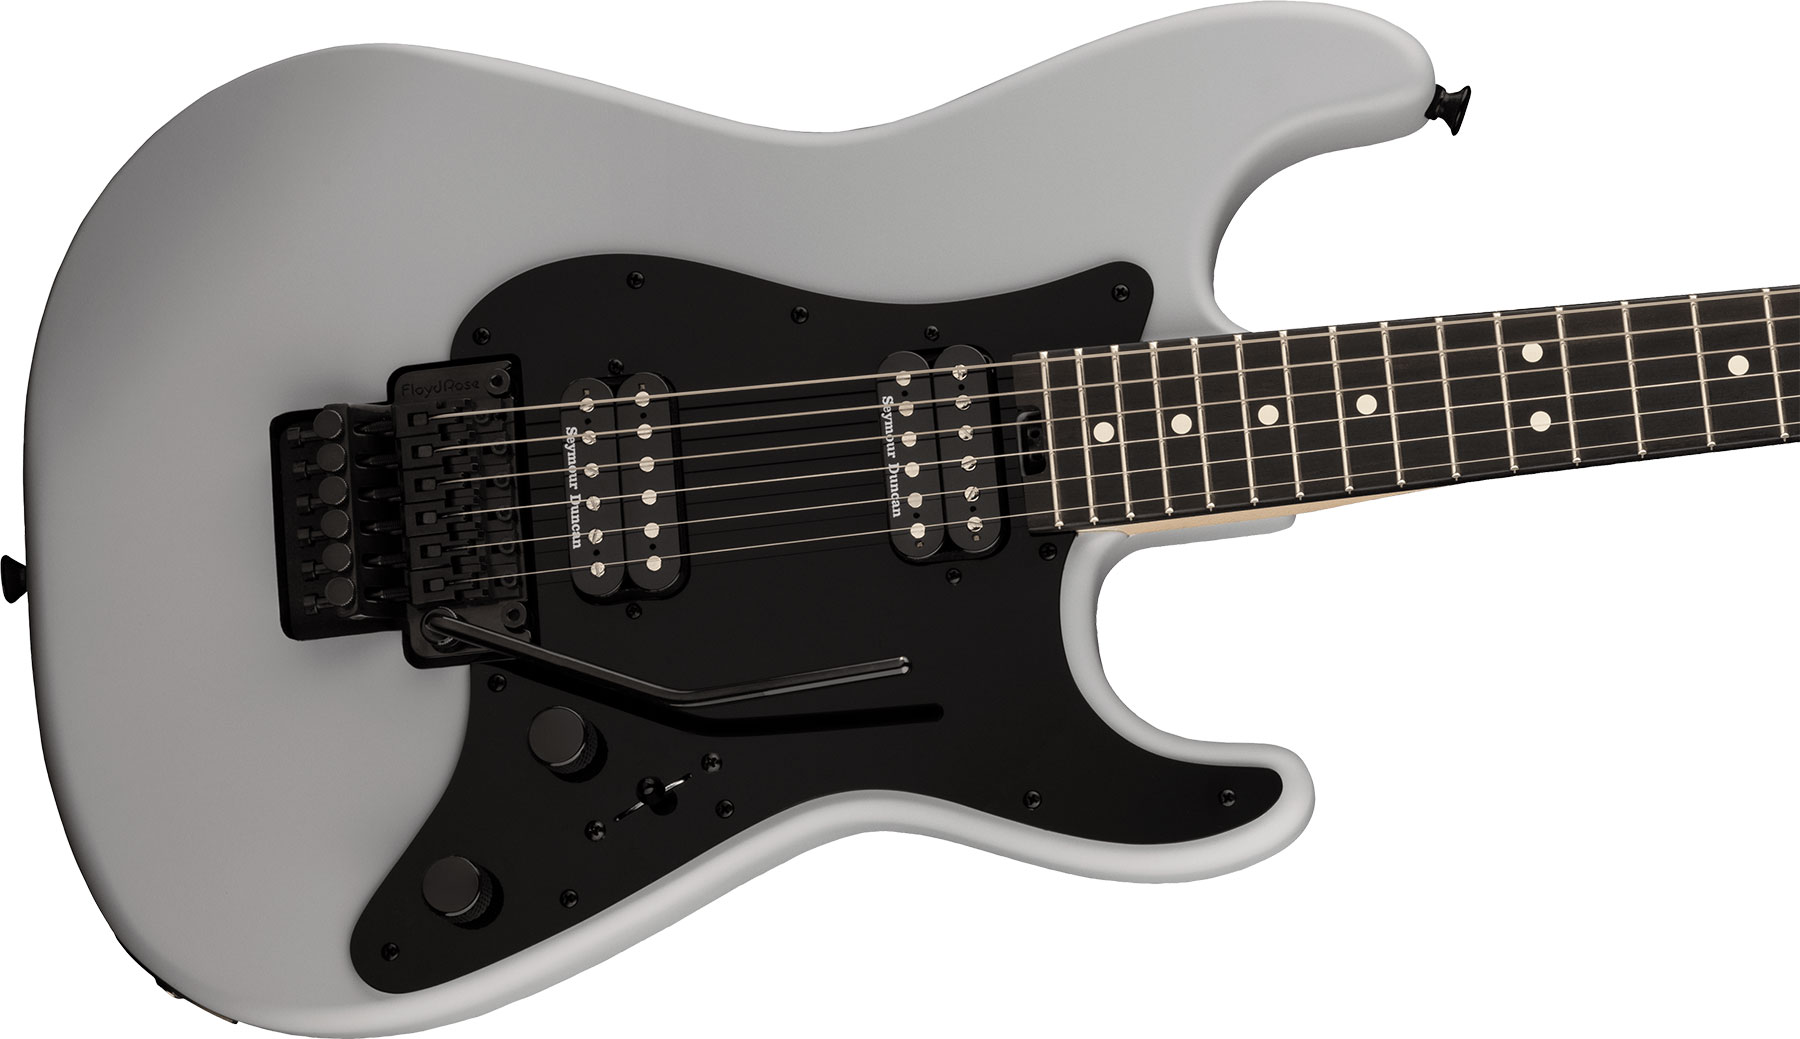 Charvel So-cal Style 1 Hh Fr E Pro-mod 2h Seymour Duncan Eb - Satin Primer Gray - Str shape electric guitar - Variation 2